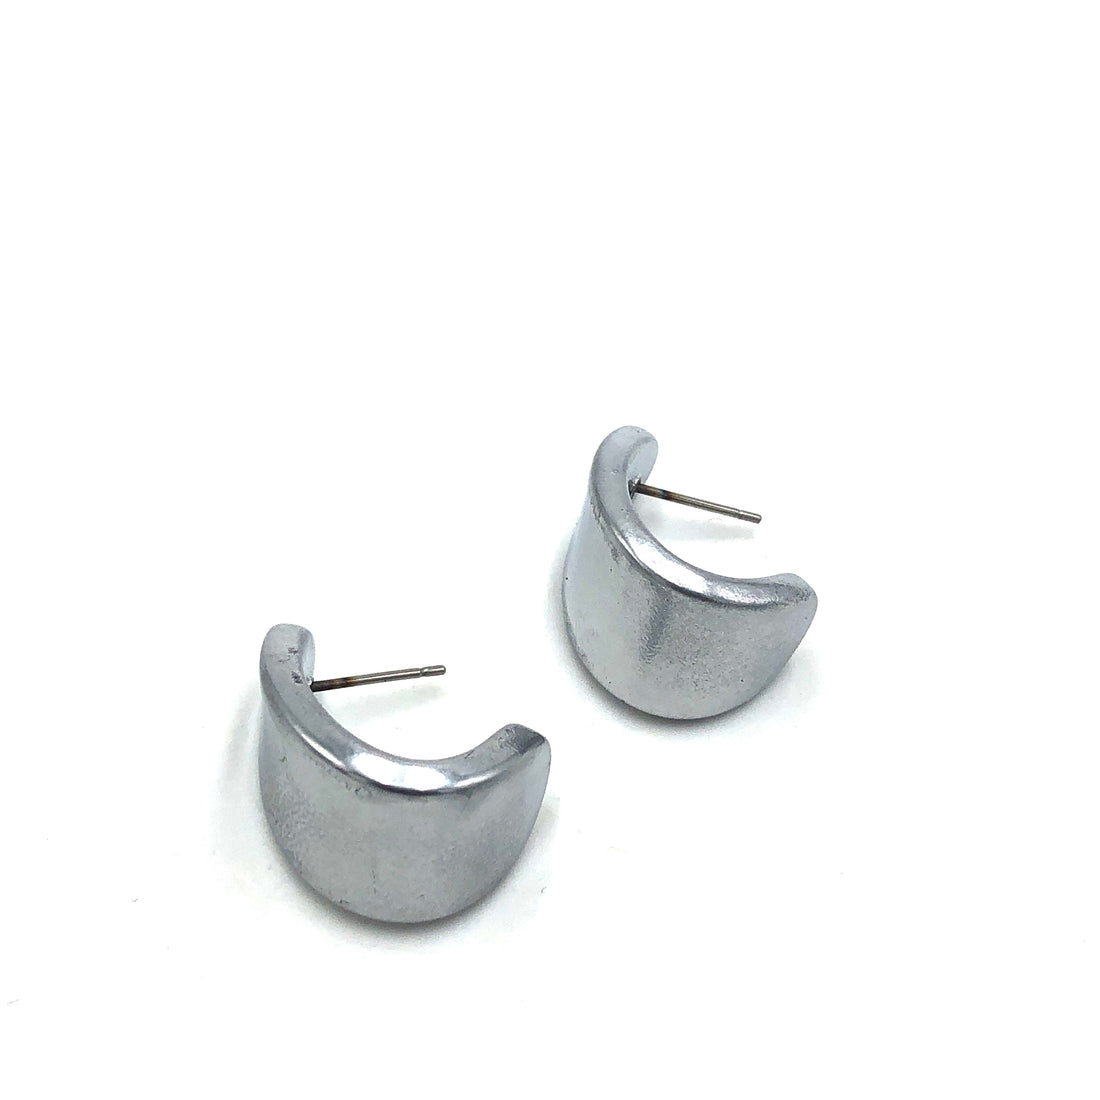 Shabby Metallic Silver Curled Petal Stud Earrings